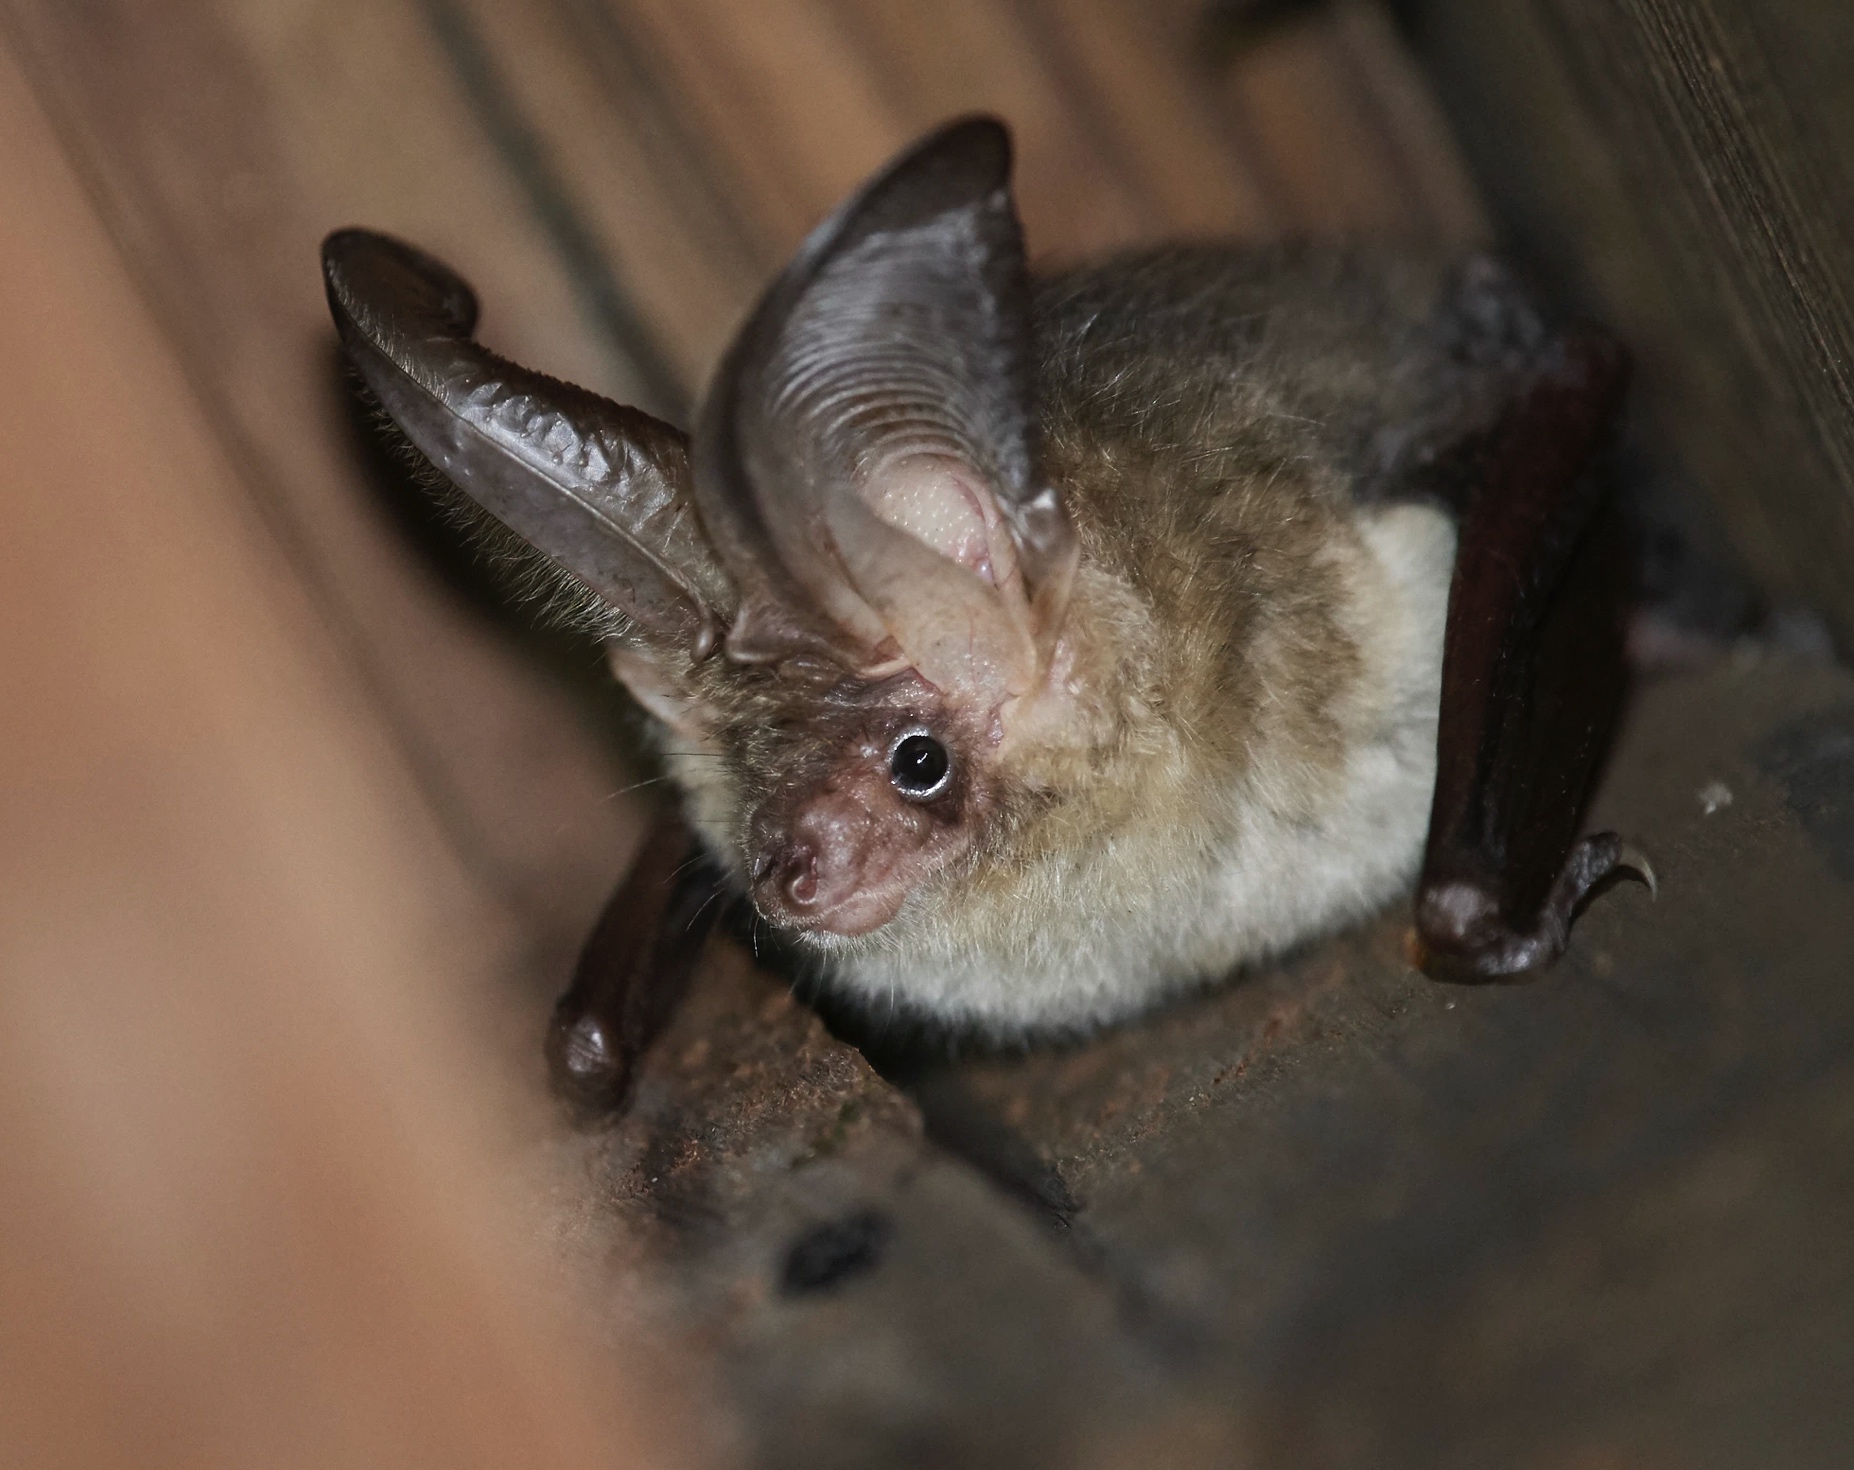 An image of a brown long-eared bat